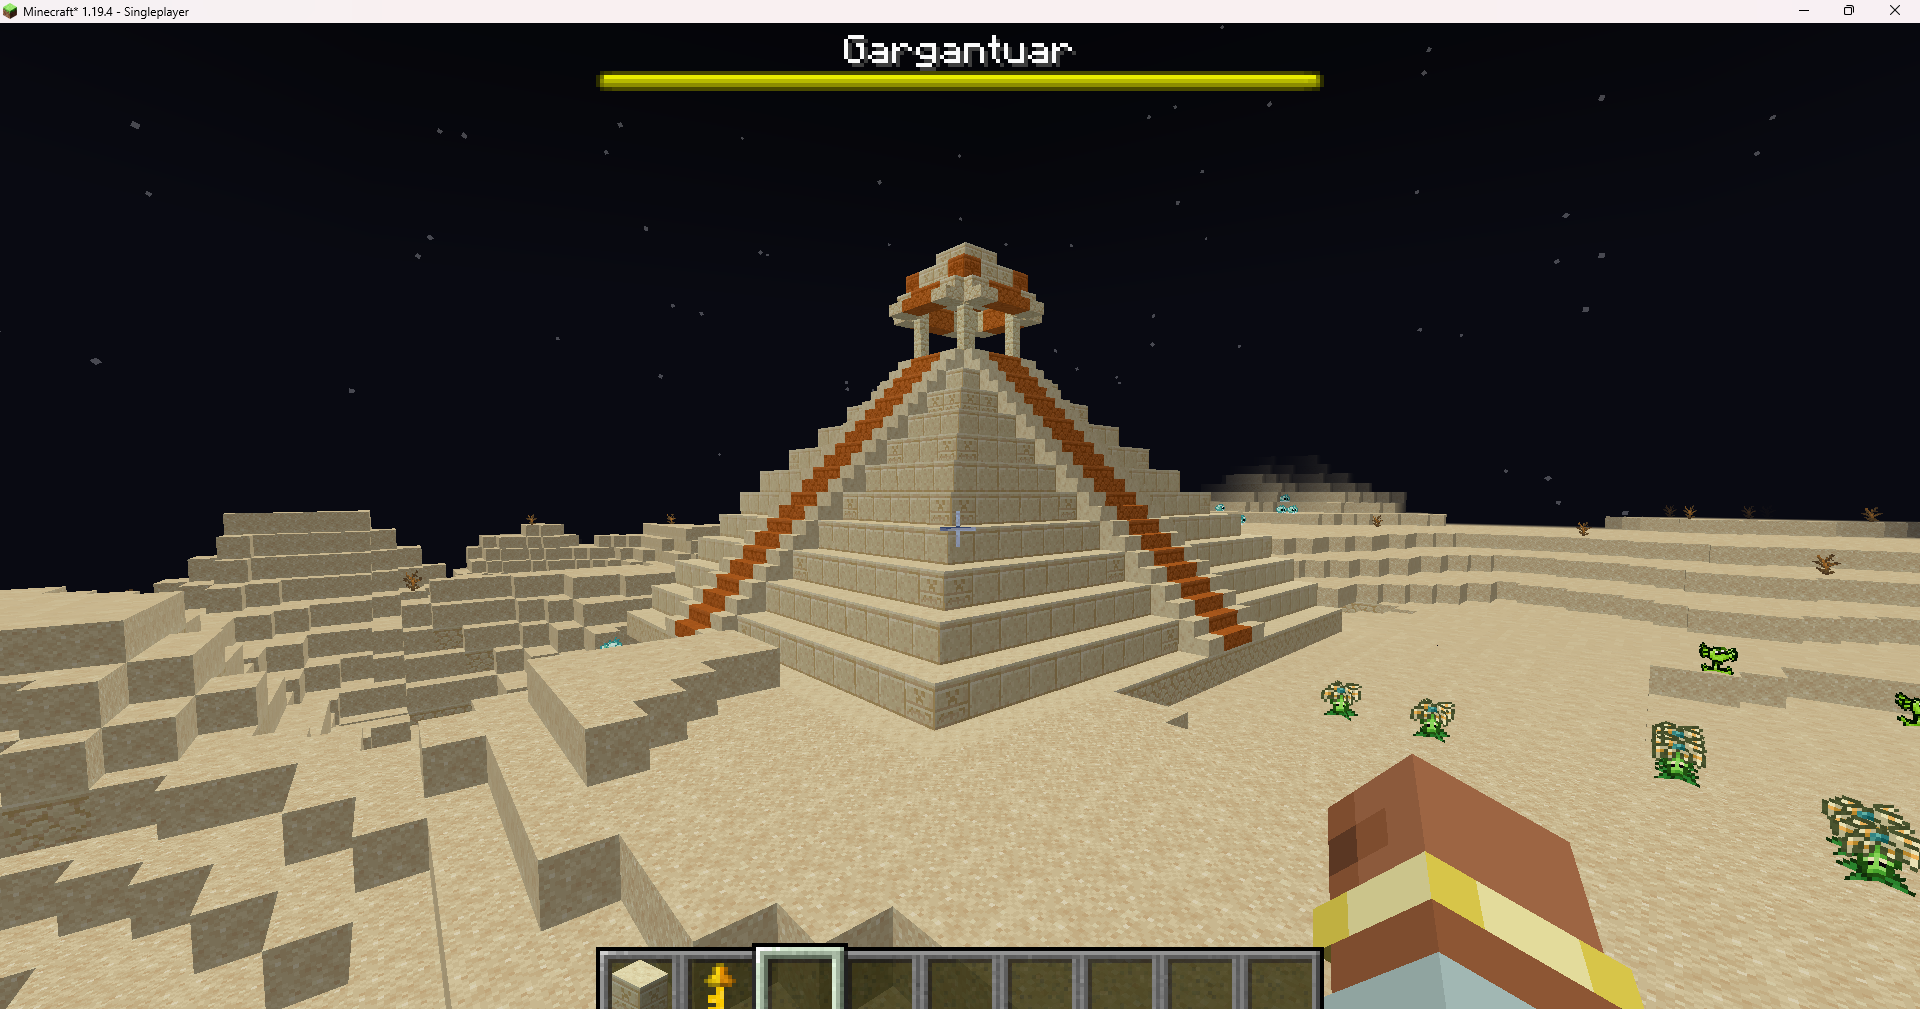 Gargantuar's Pyramid